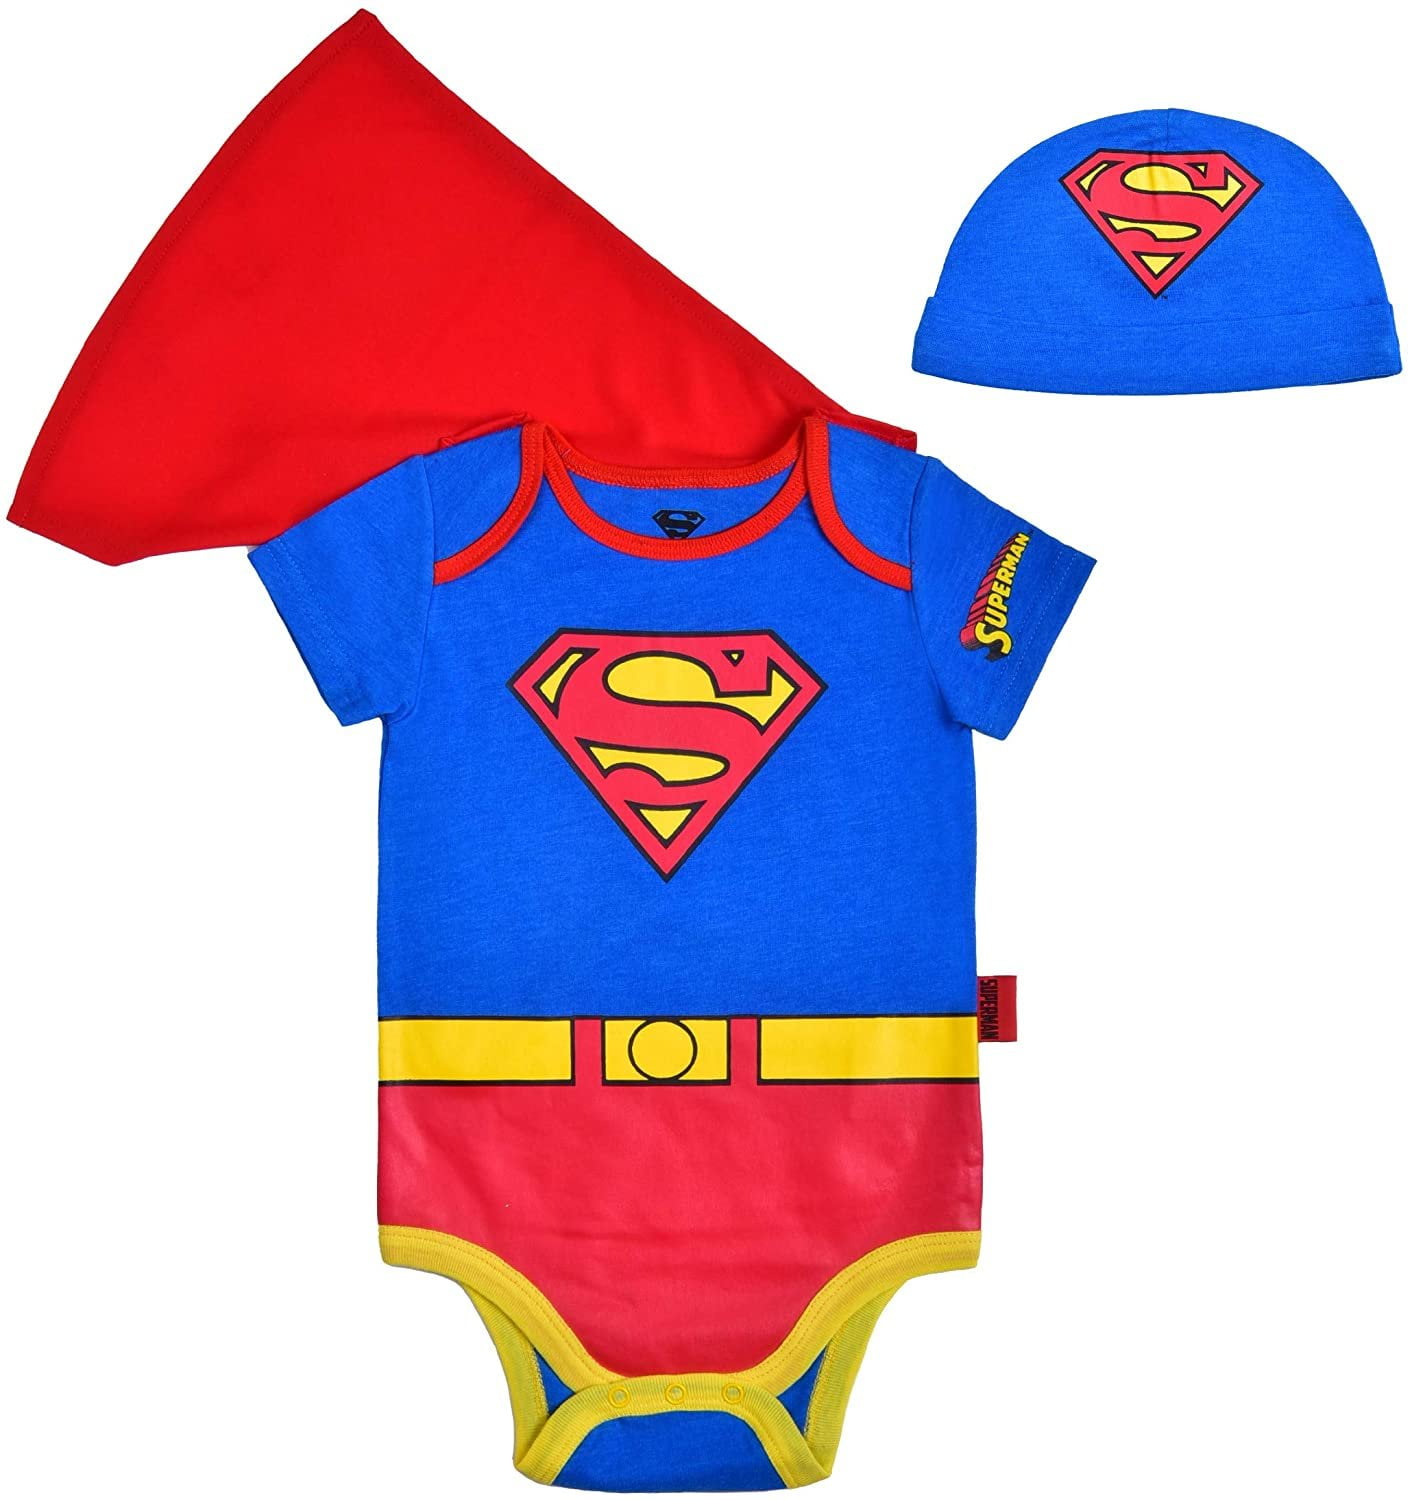 SUPERMAN DC Comics SUPERHERO Baby Infant Toddler ONE PIECE BODYSUIT 3 6 9 Months 